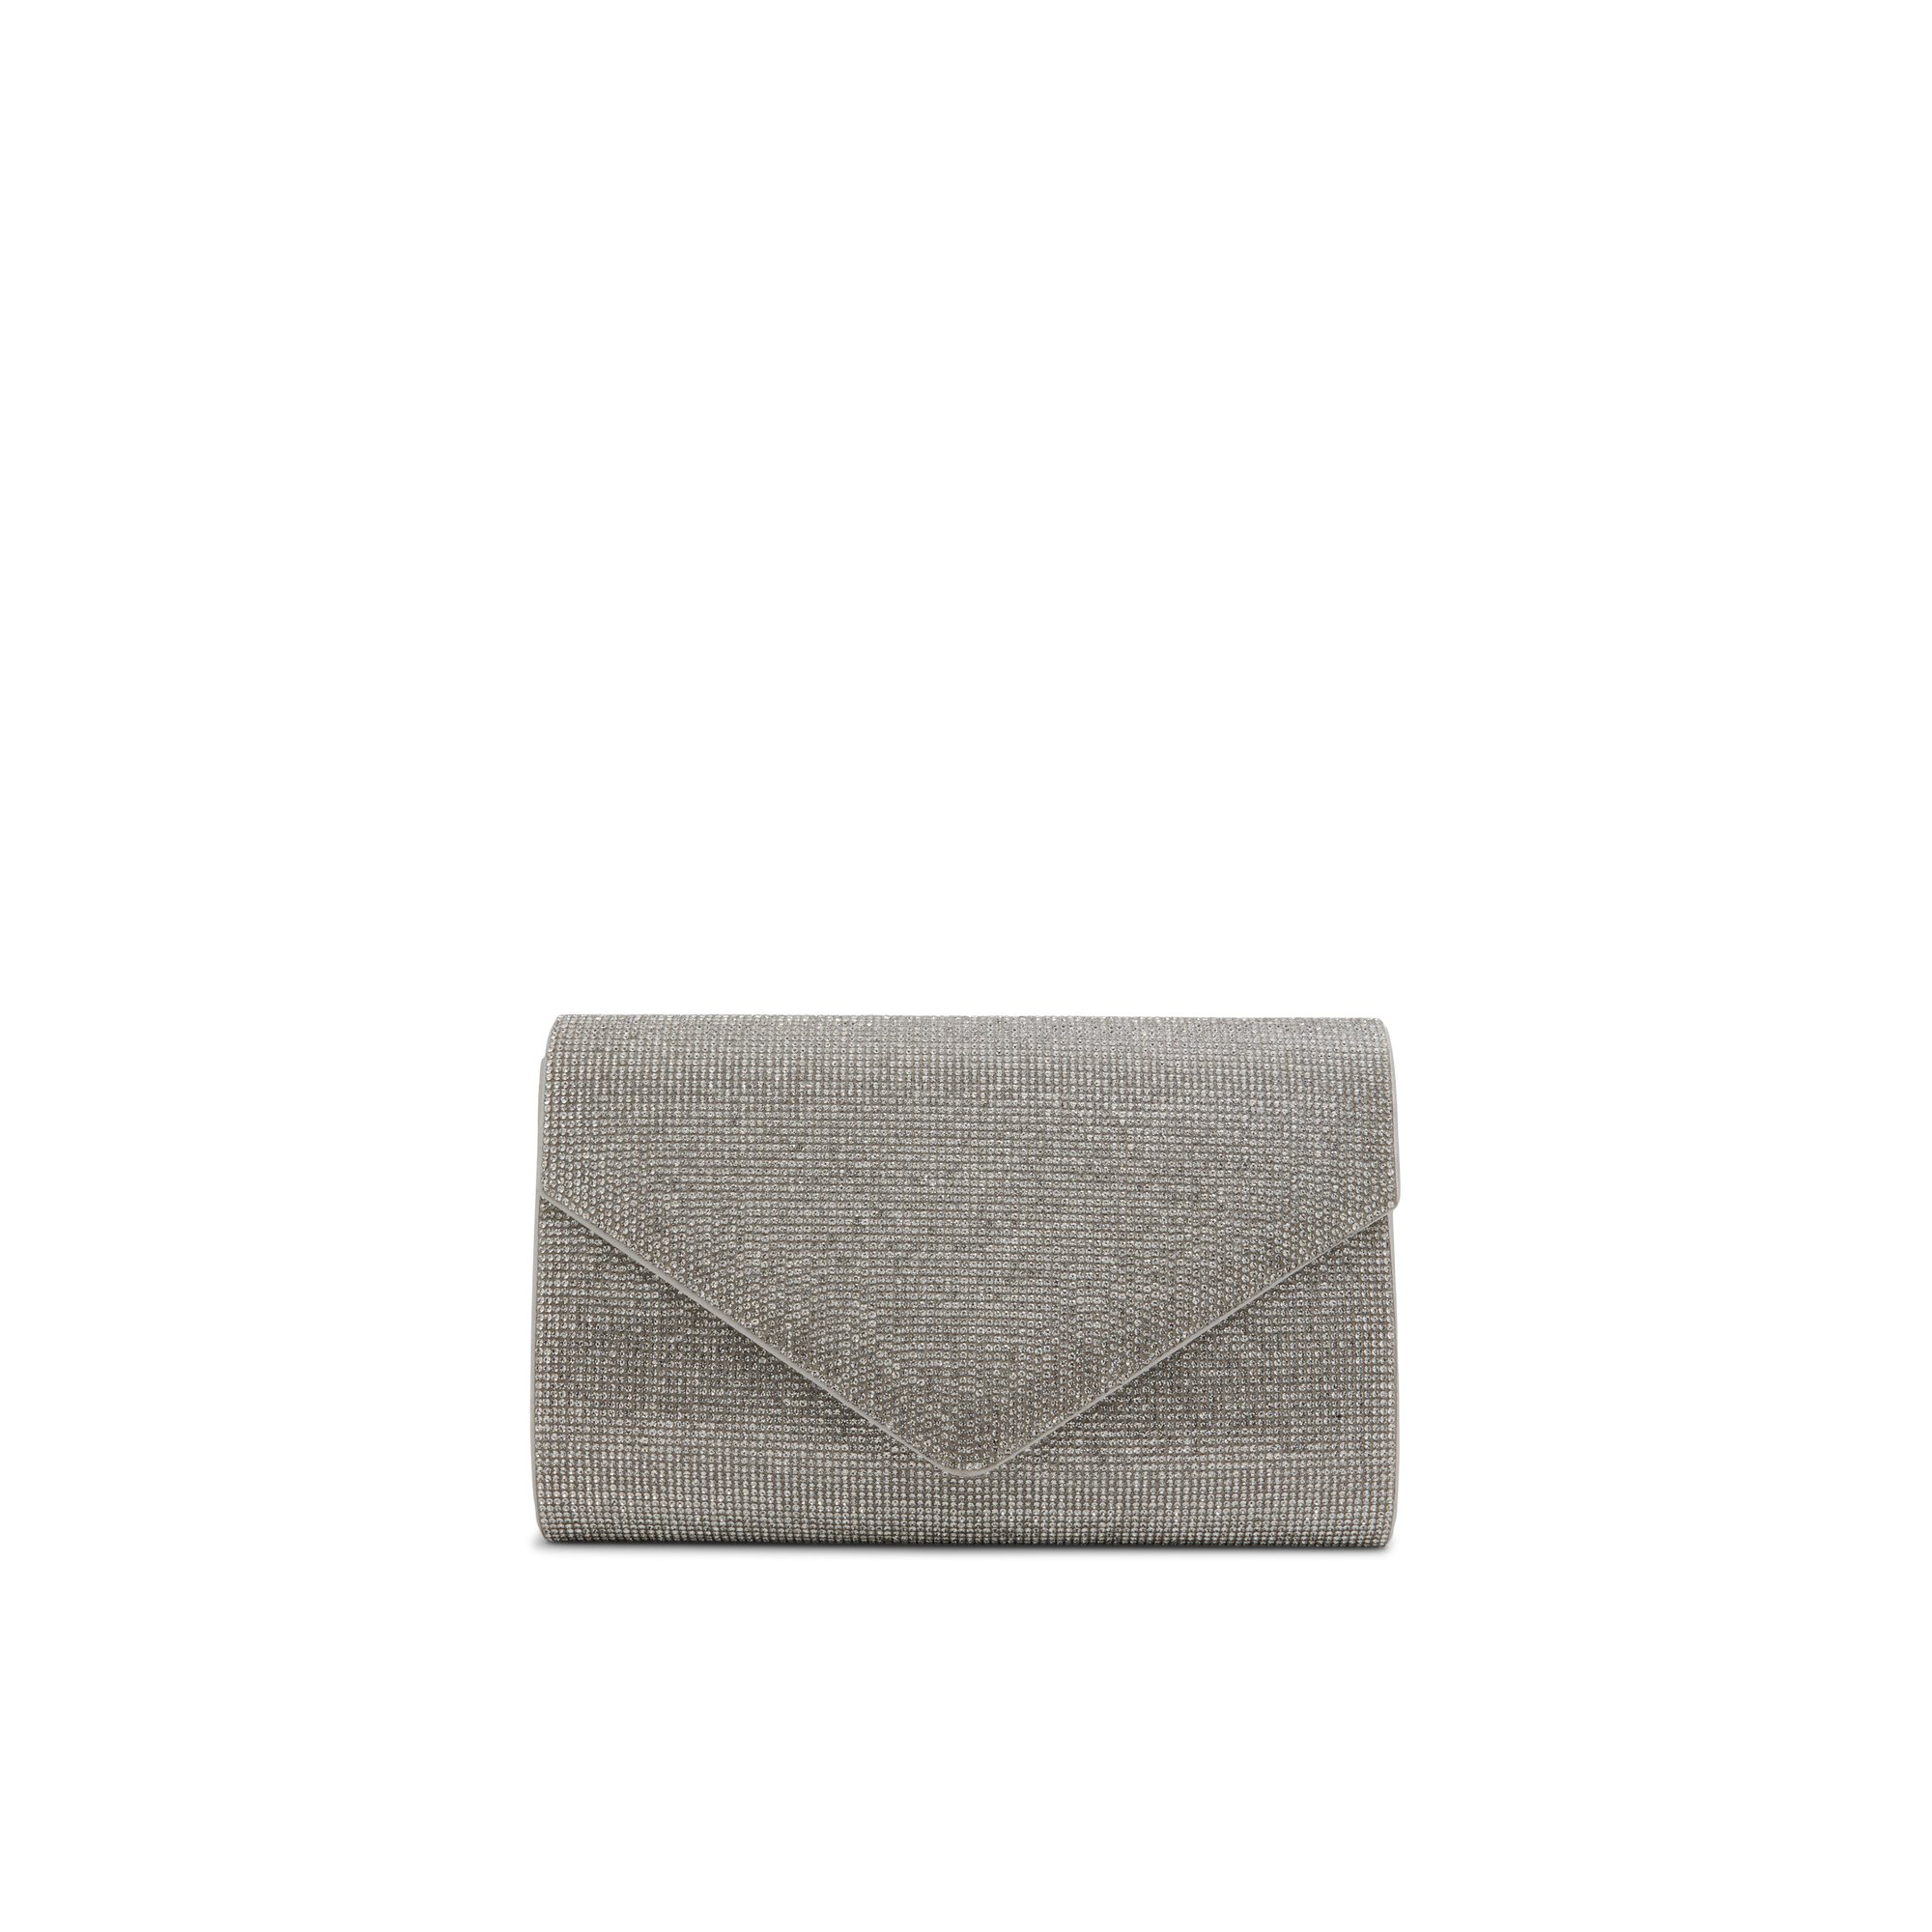 ALDO Geaven - Women's Handbags Clutches & Evening Bags - Silver